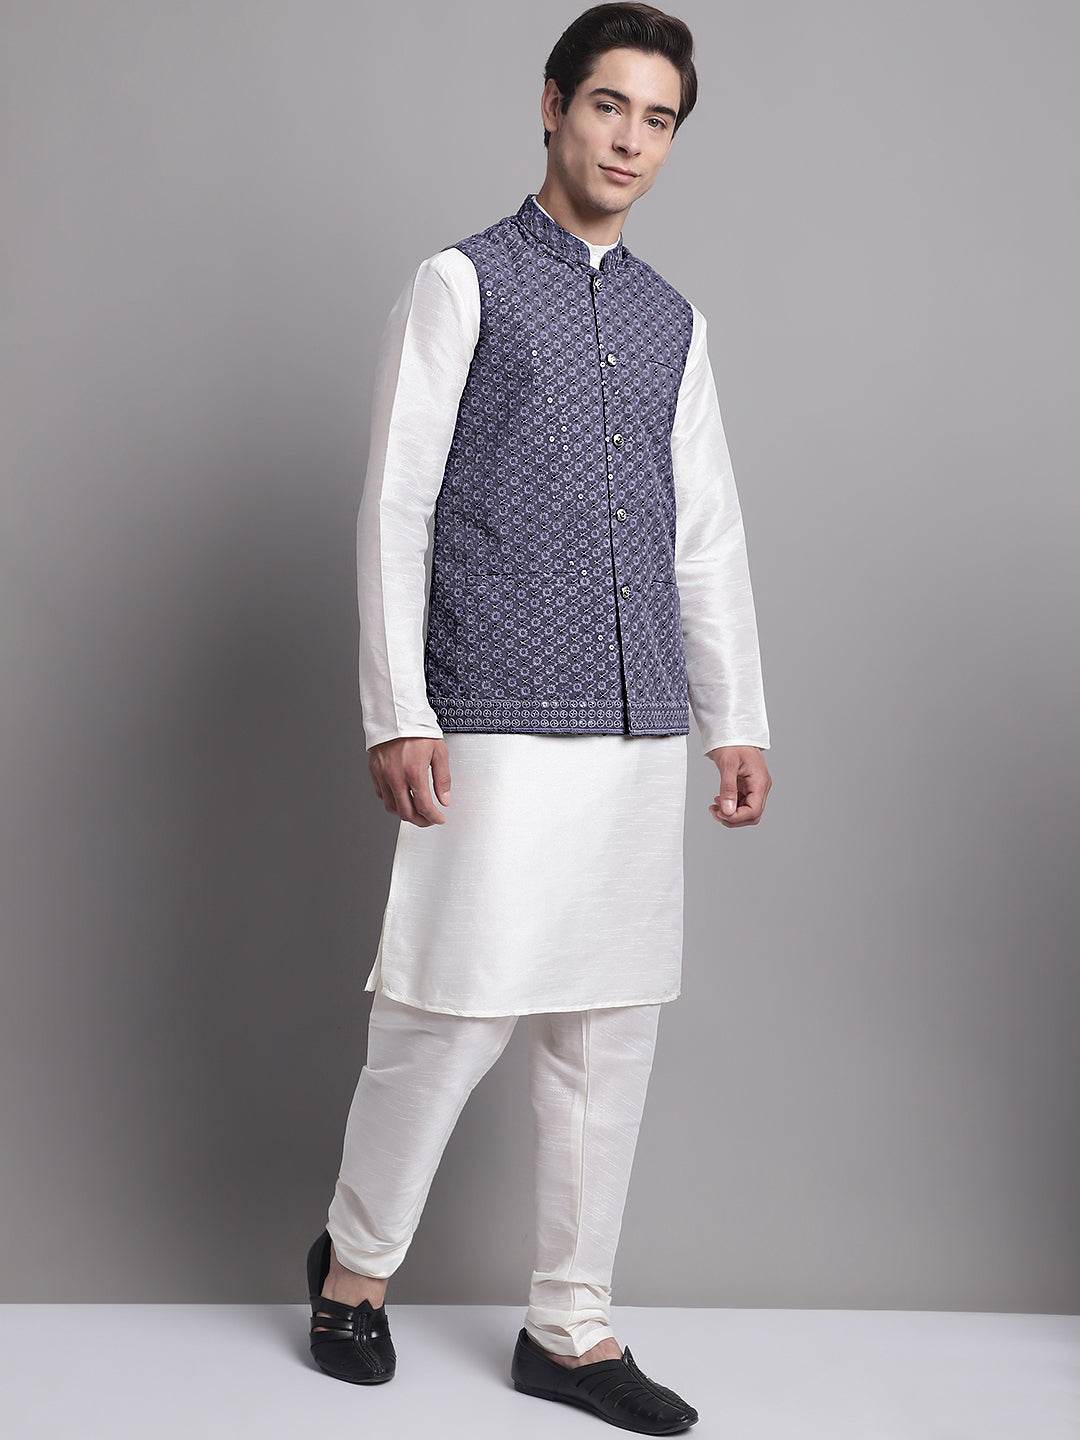 Men's Grey Sequins and Embroidred Nehru Jacket With Solid Kurta Pyjama.